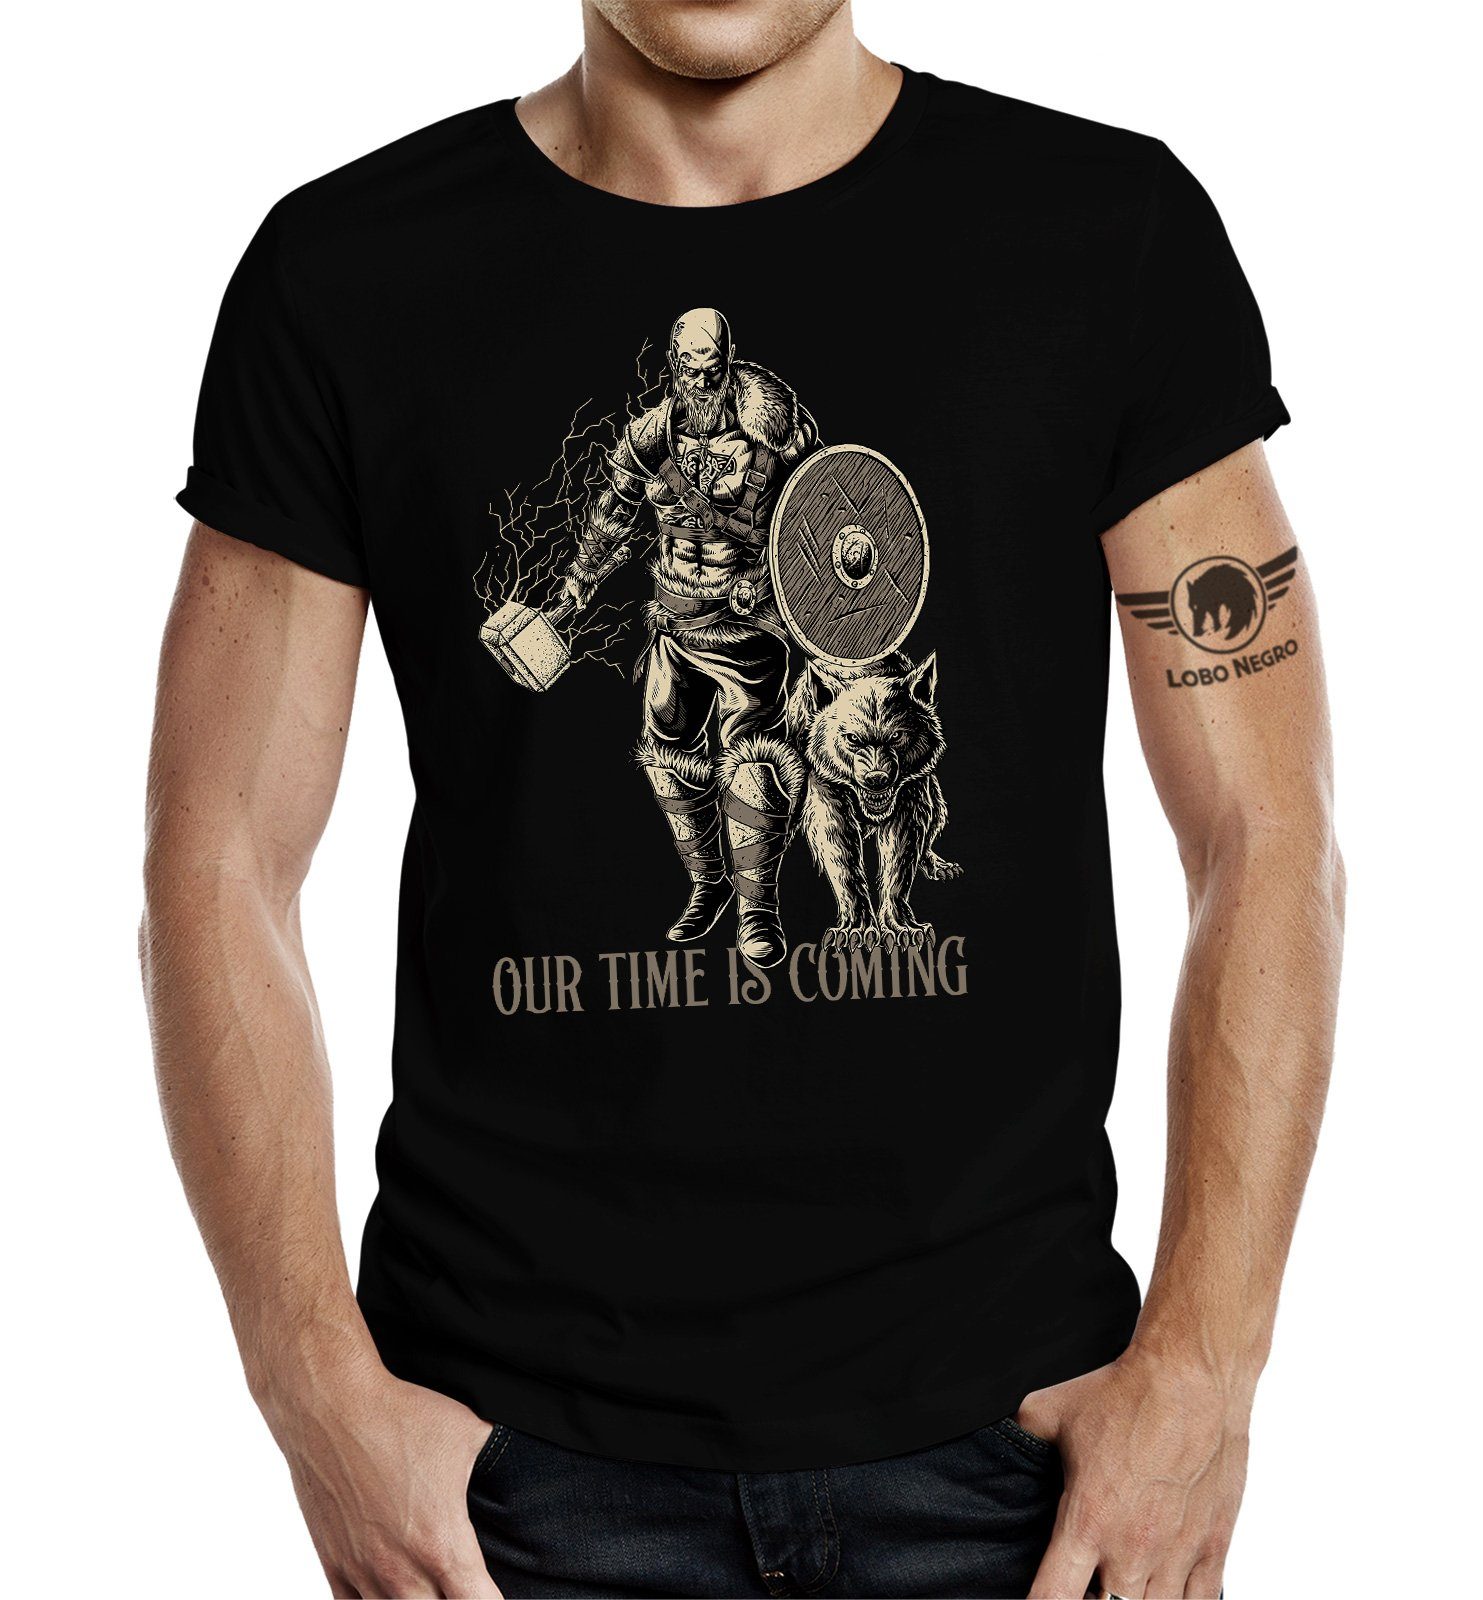 LOBO NEGRO® T-Shirt für den Wikinger Fan: Our Time is Coming